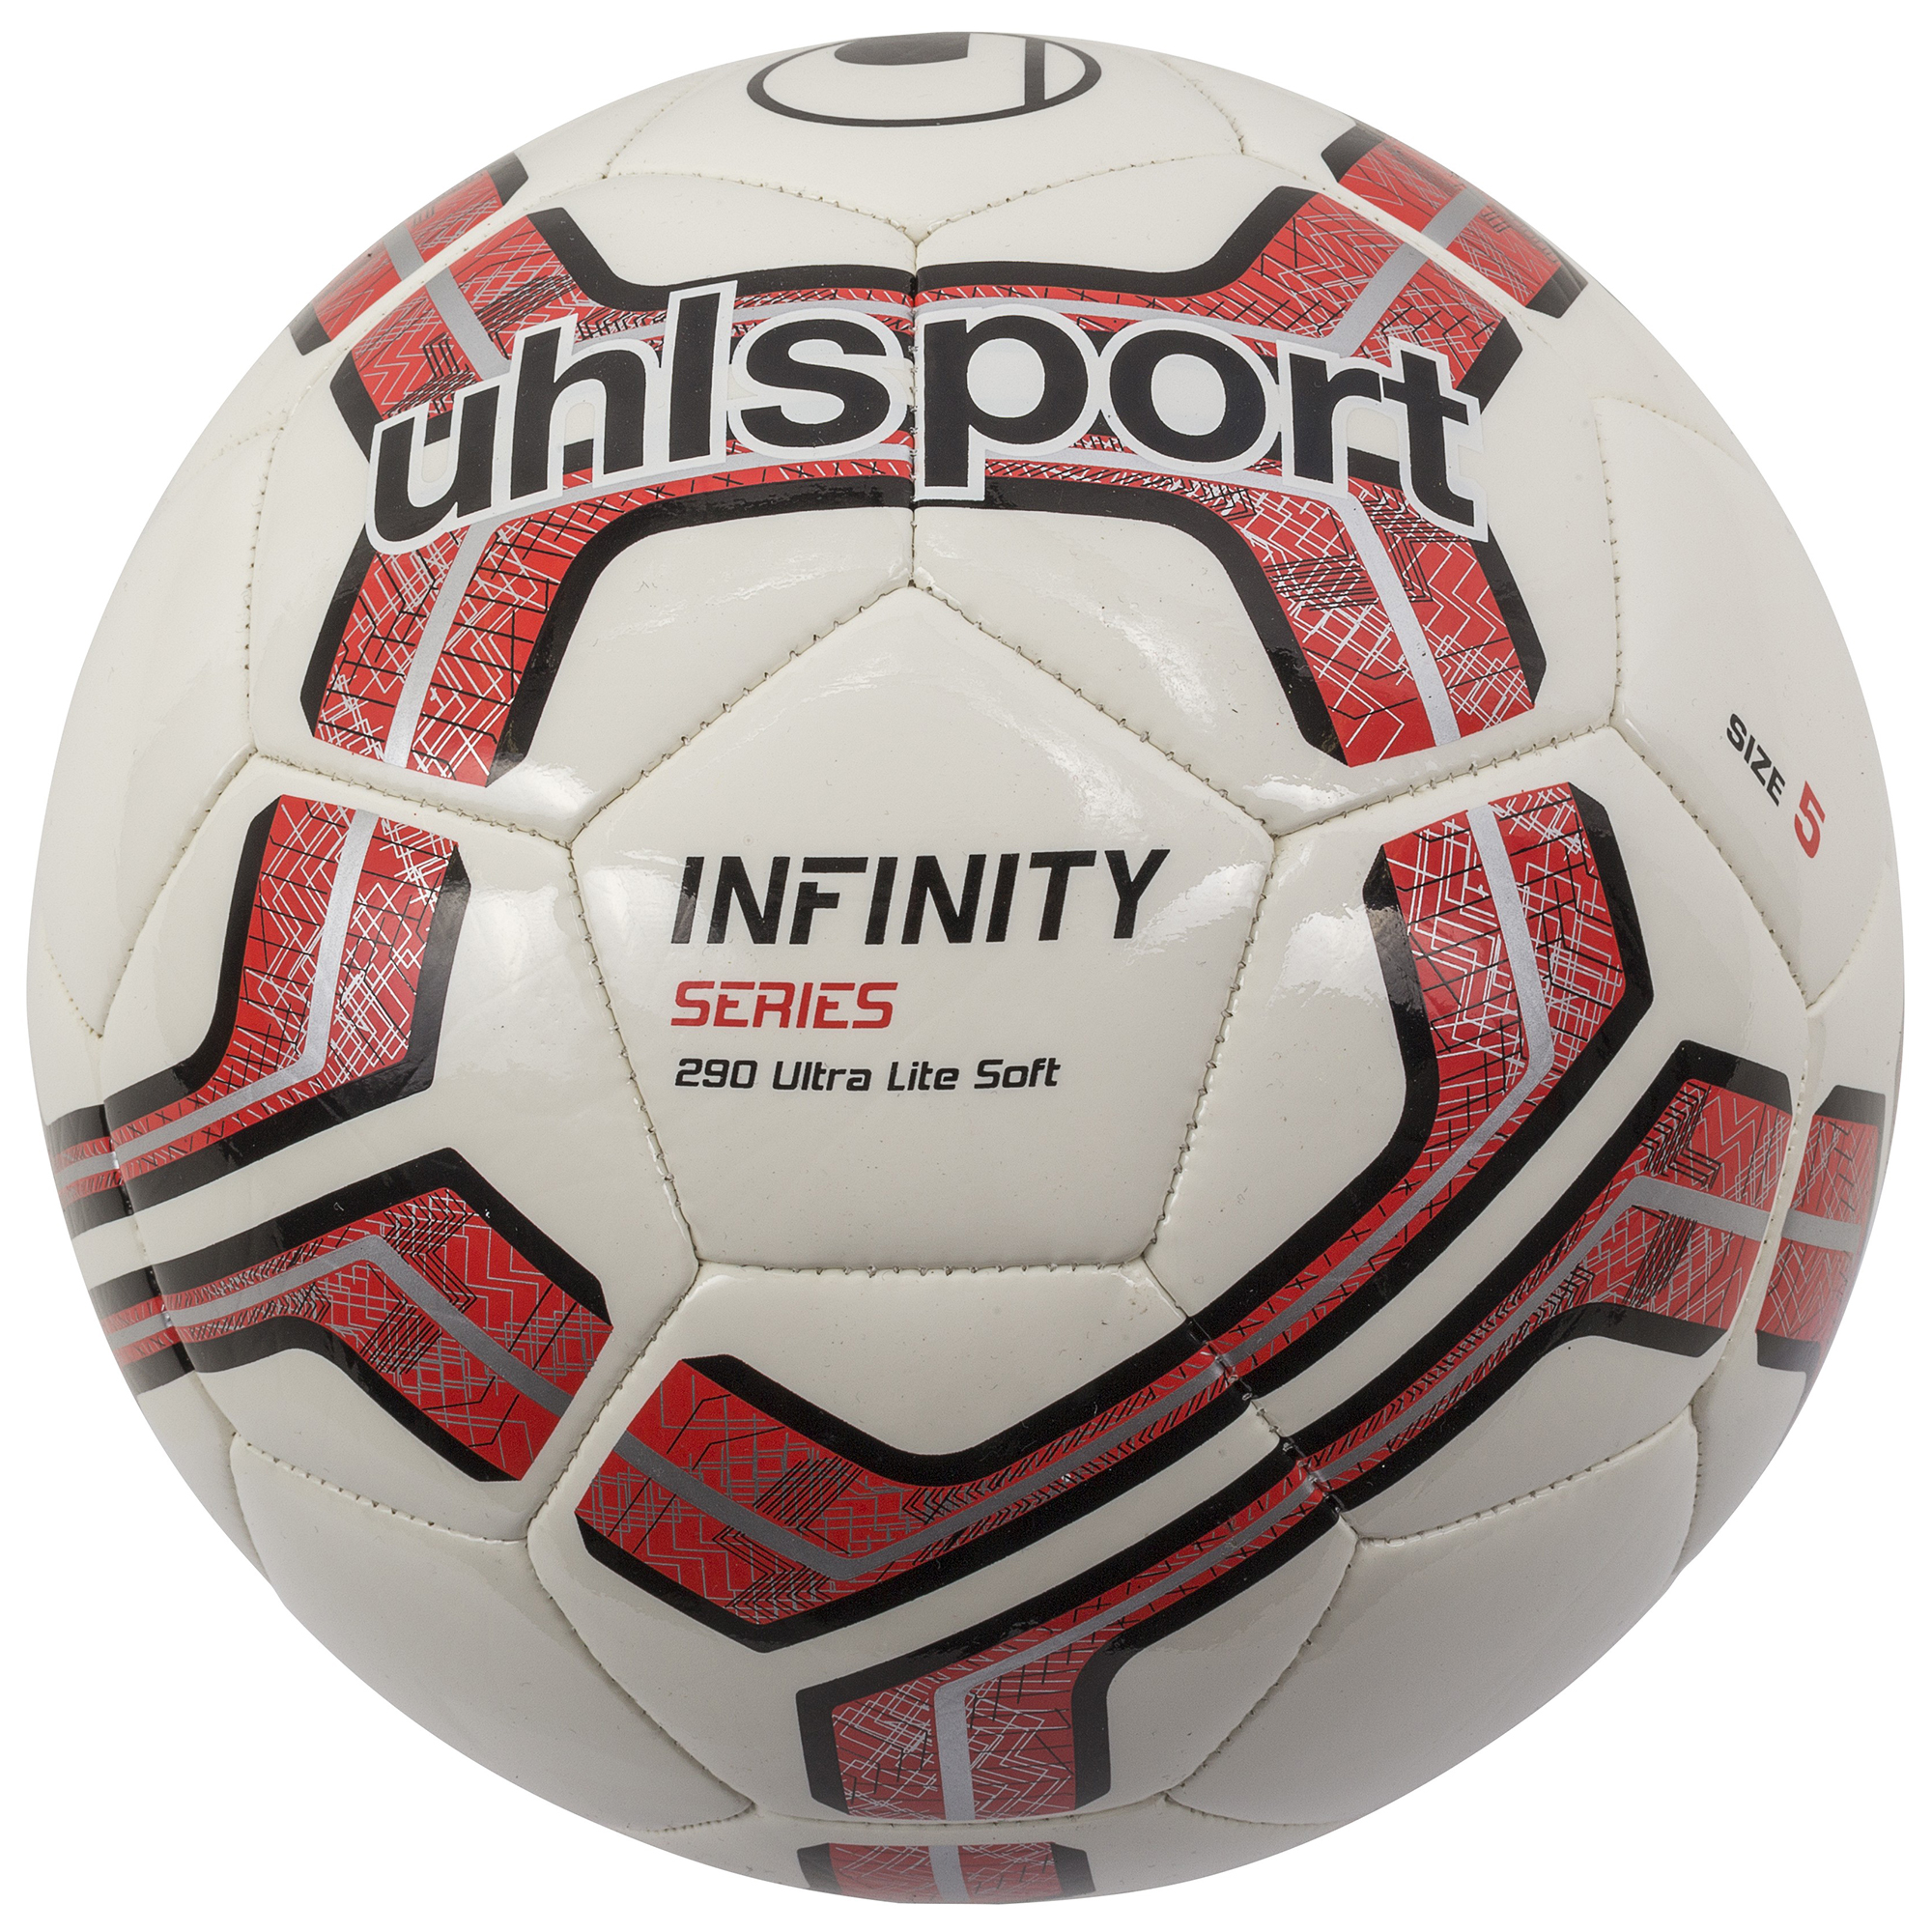 Kinder weiß/rot/schwarz Uhlsport Infinity 290 Ultra Lite Soft Ball 